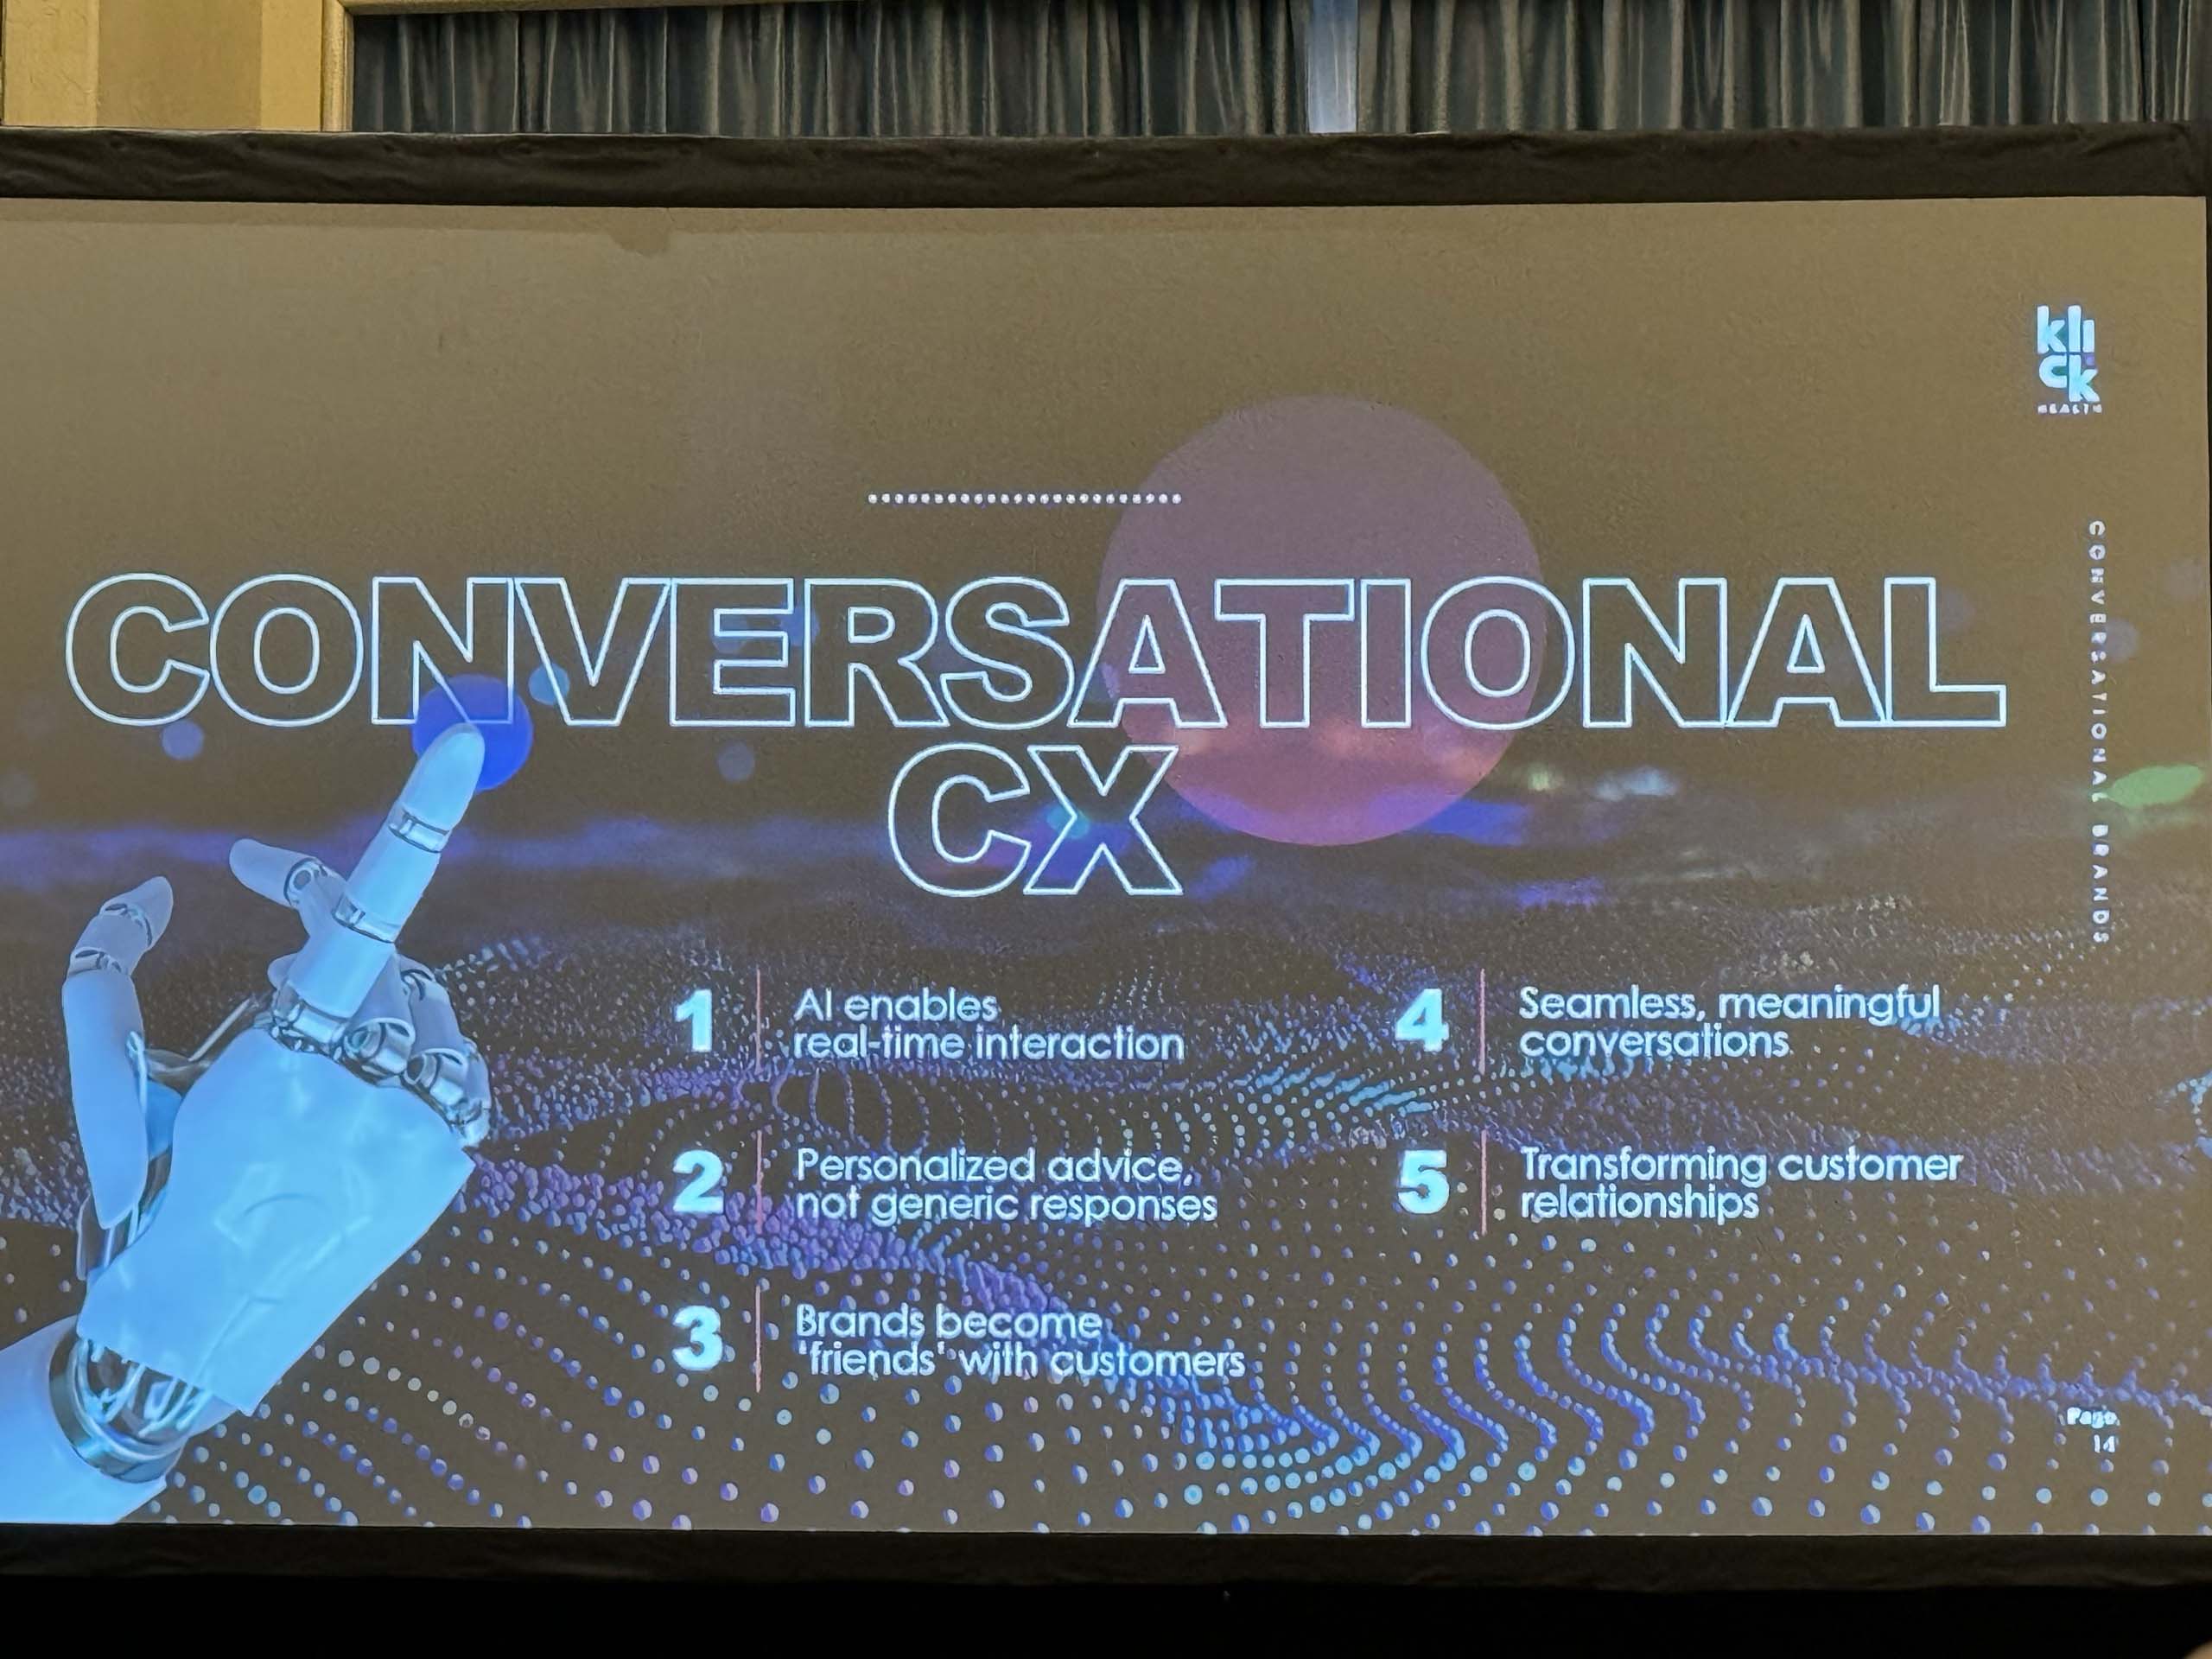 A presentation slide discussing Conversational CX.